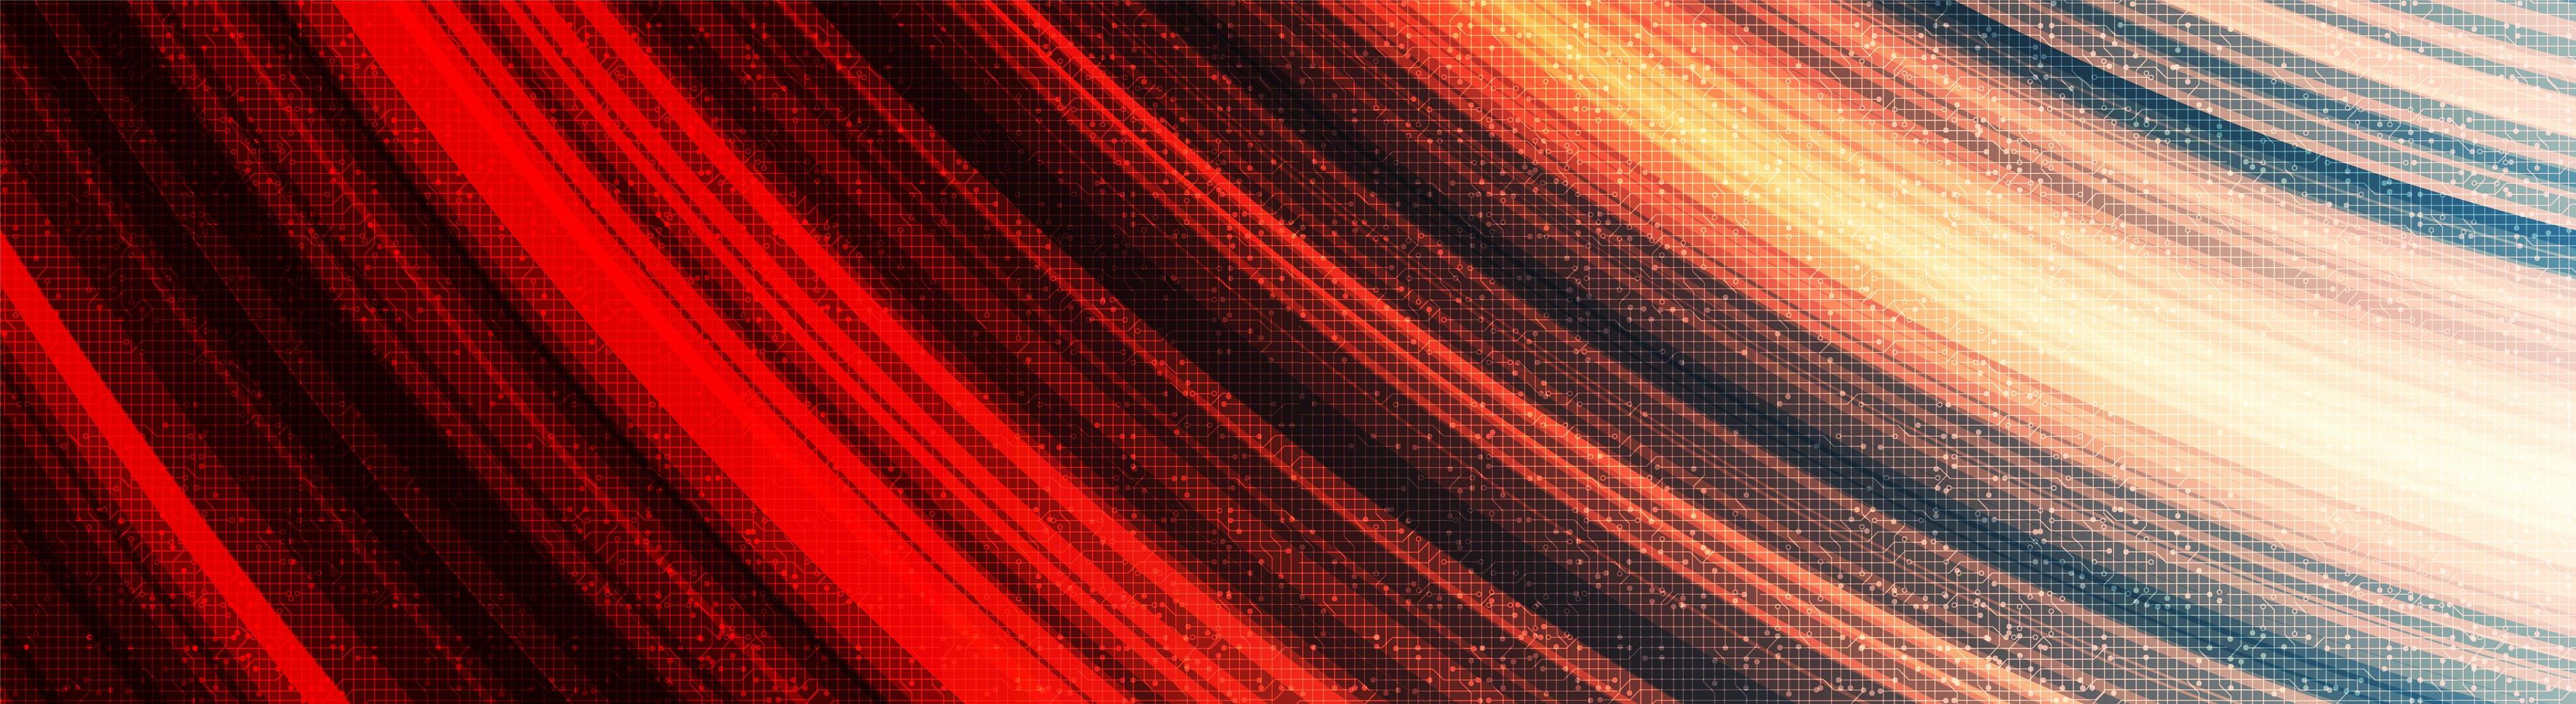 panorama röd hastighet våg bakgrund vektor